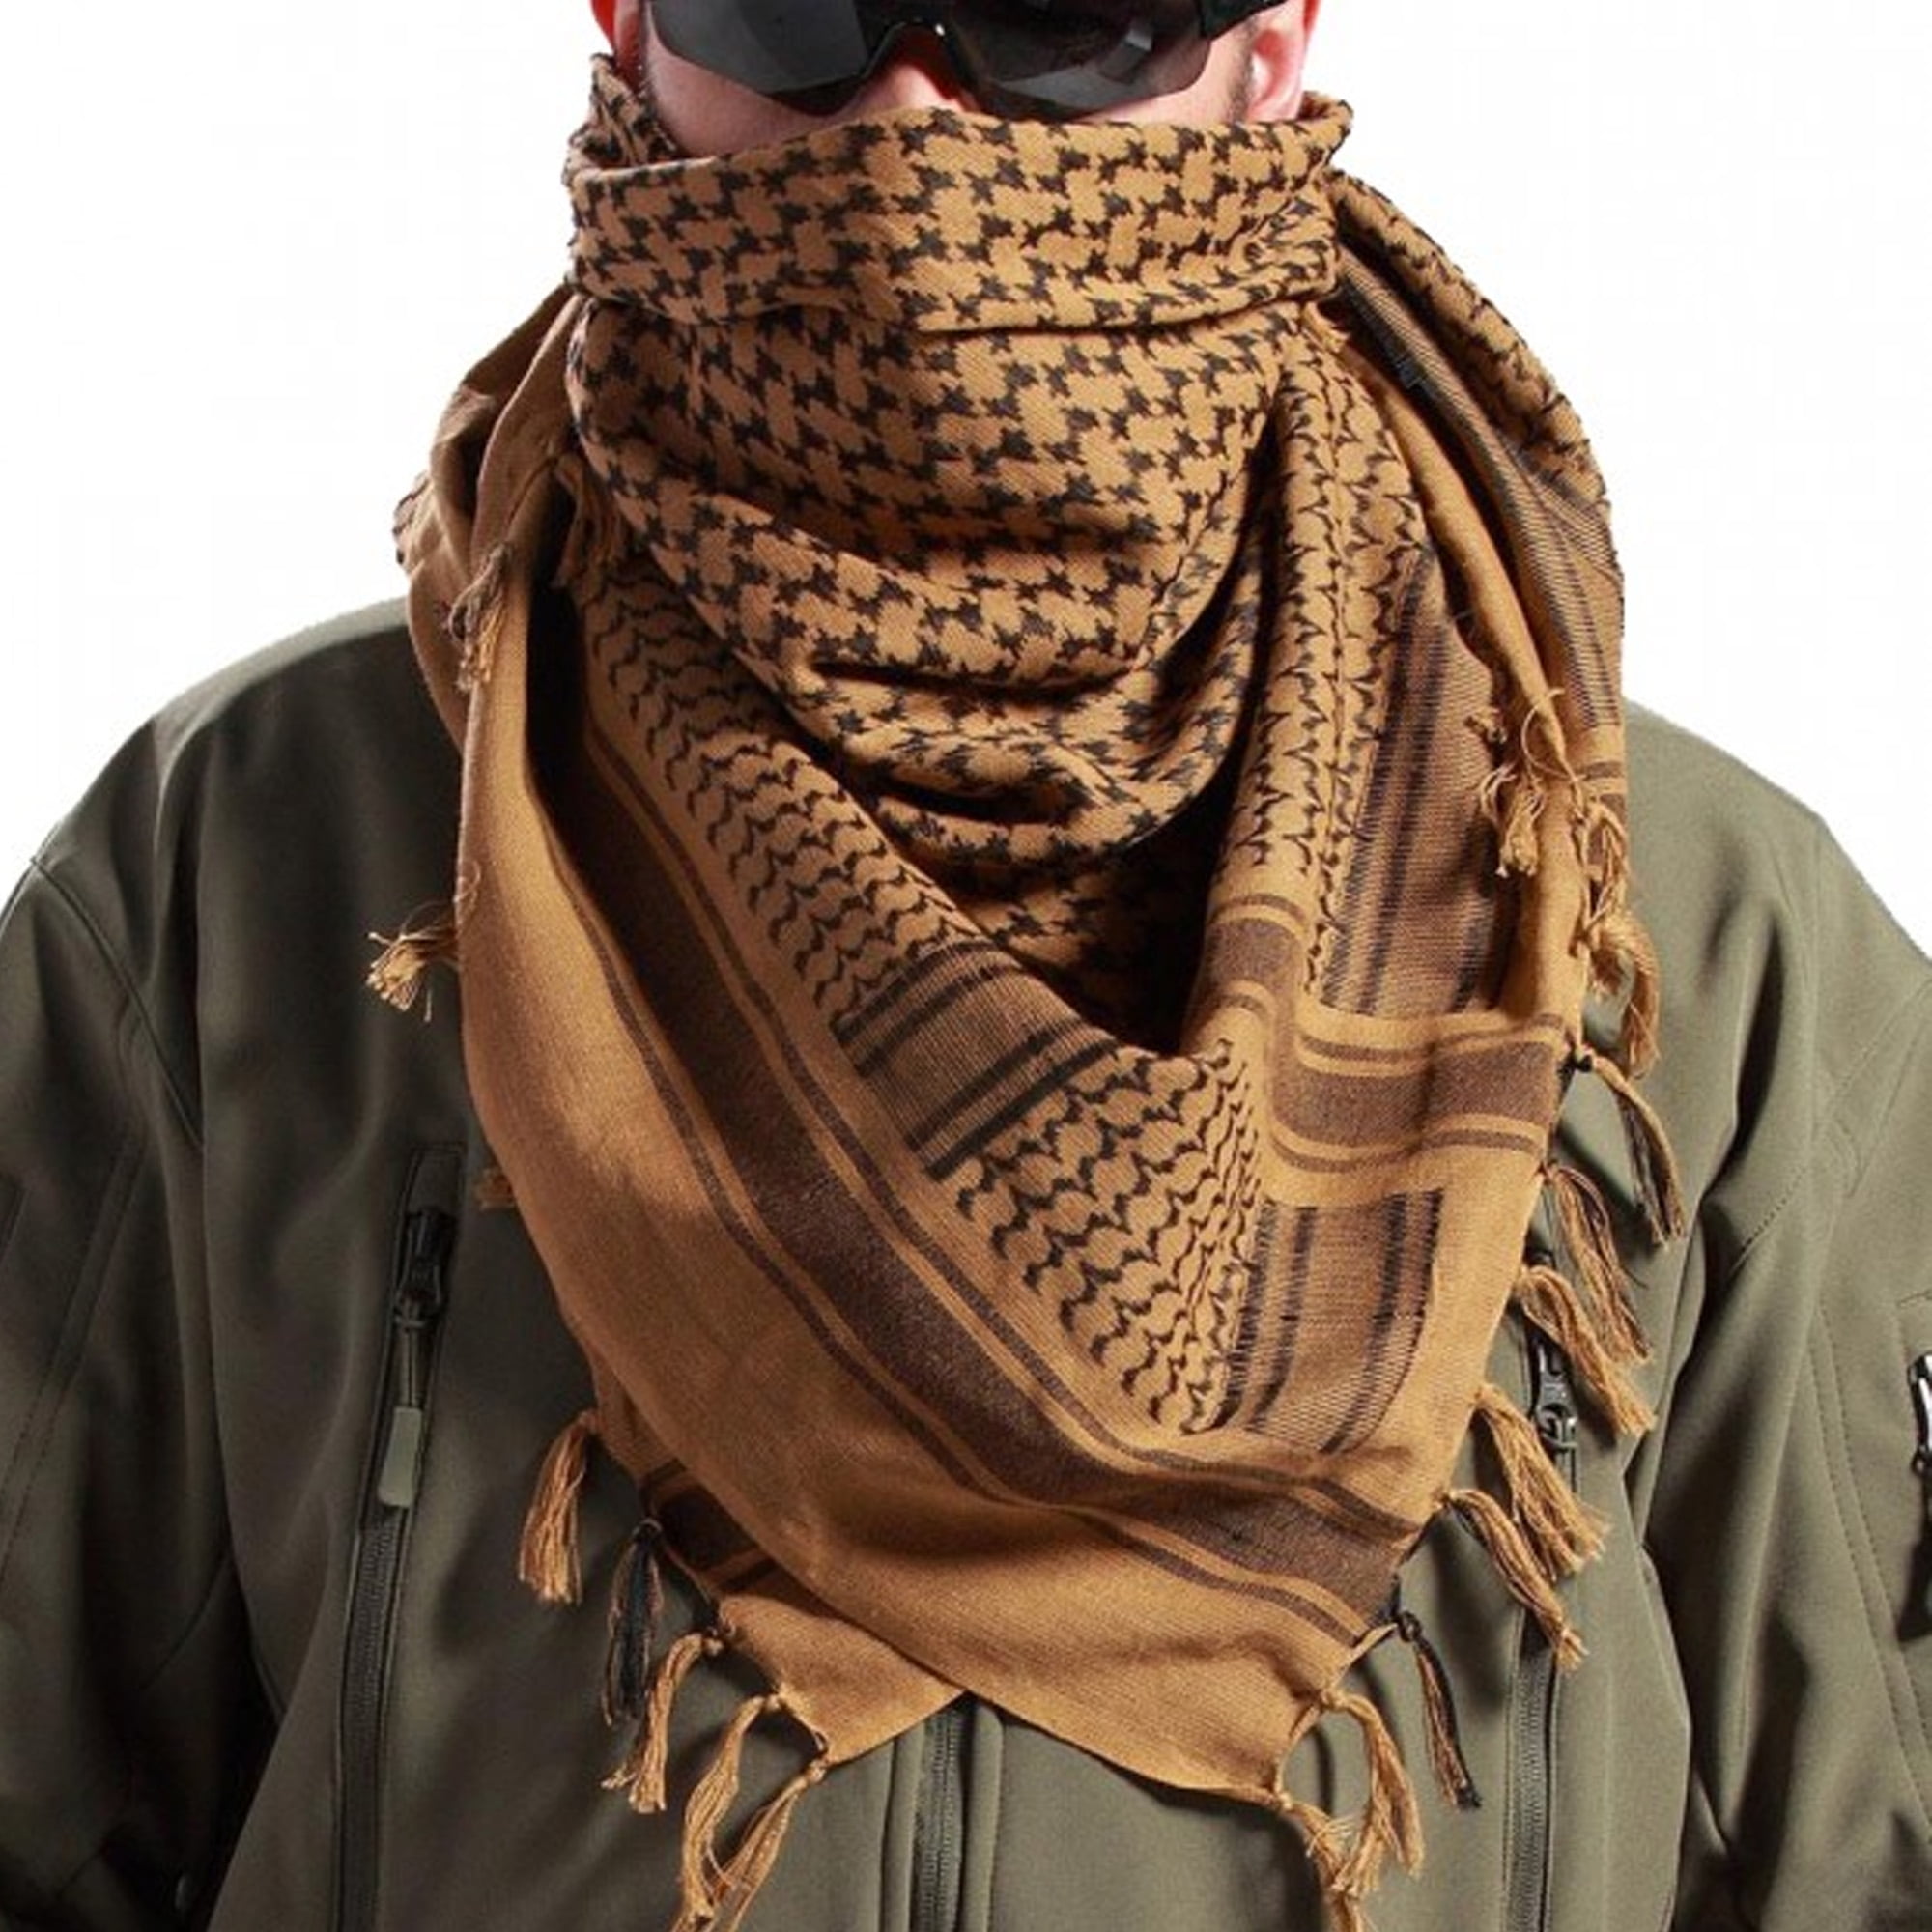 Arab Tactical Shemagh Keffiyeh Scarf Army Military Desert Check Wrap headband 